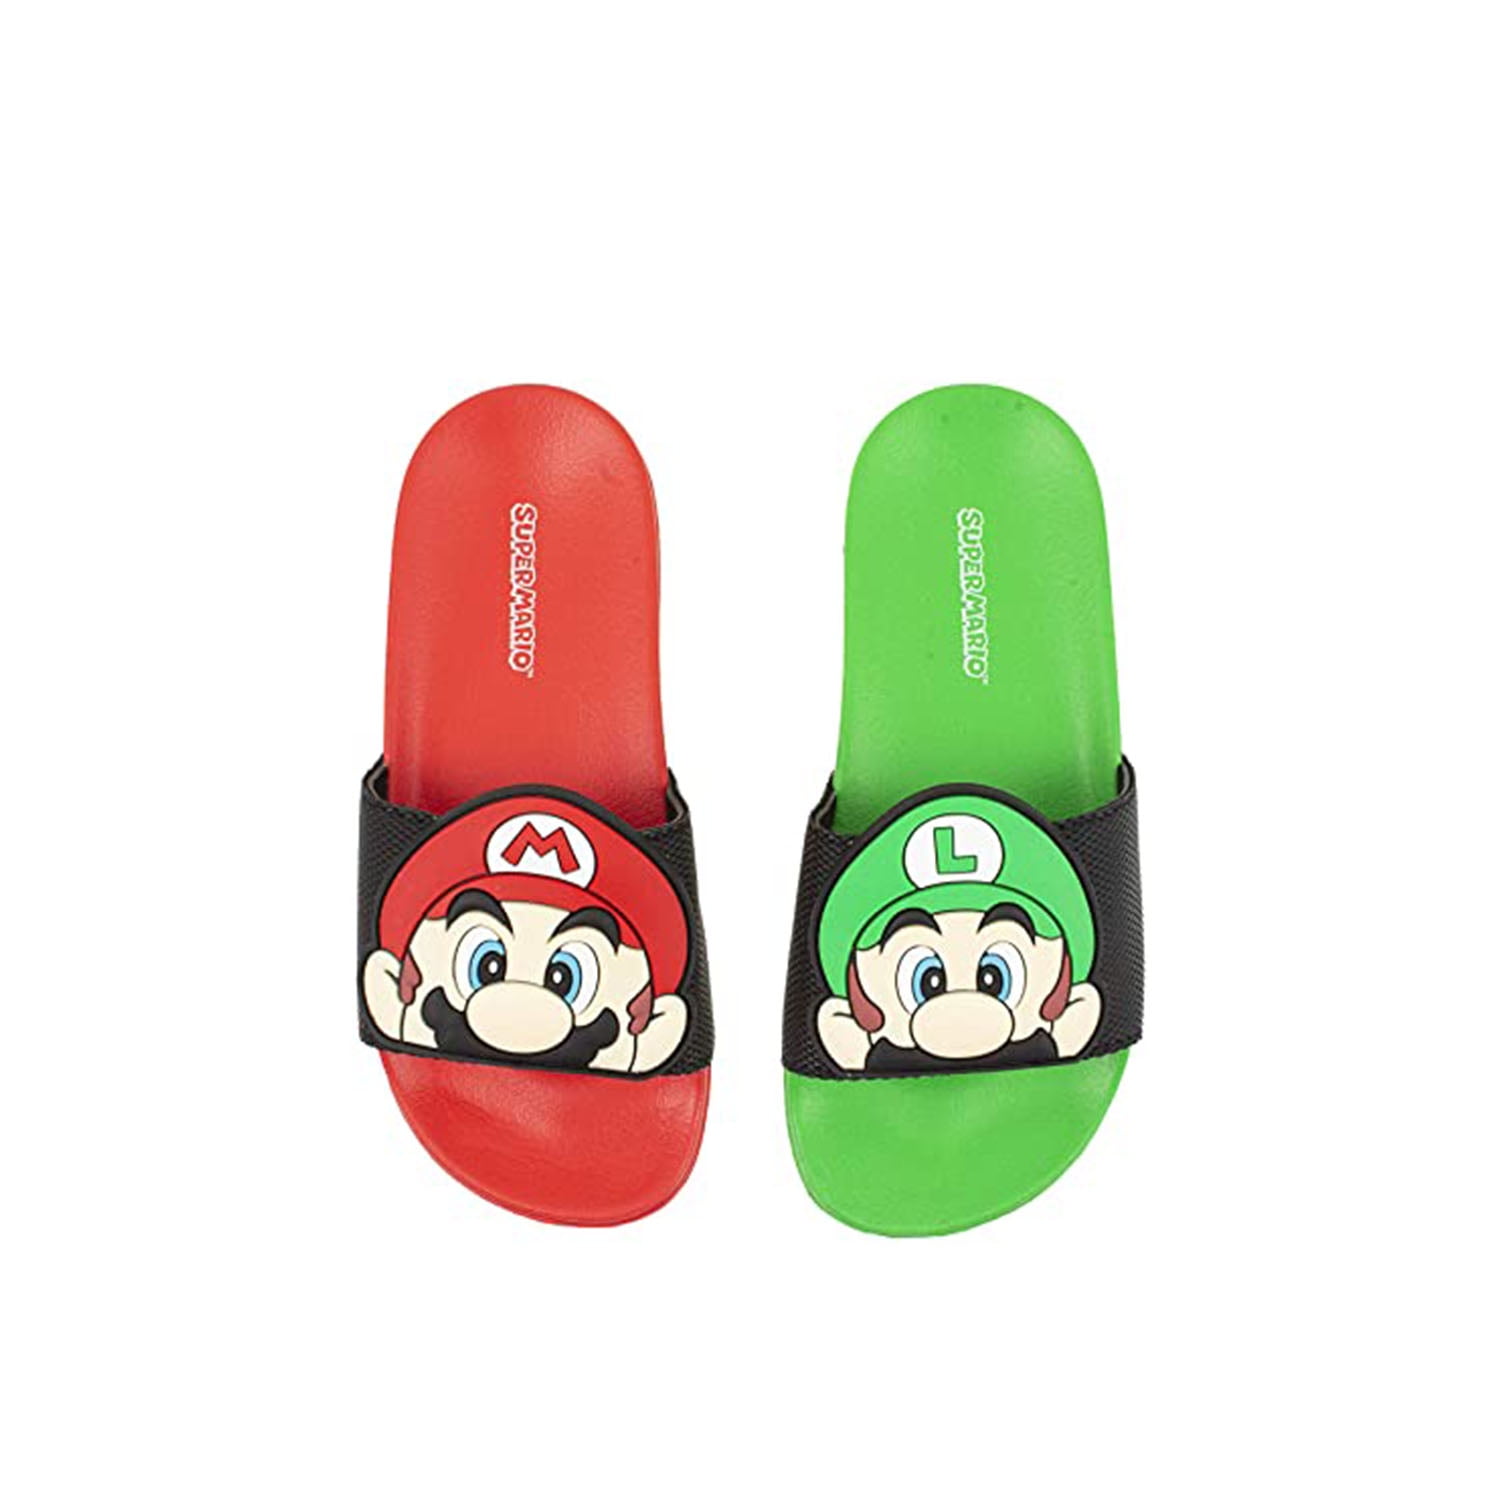 Super Mario Nintendo Sandals, Mario and 